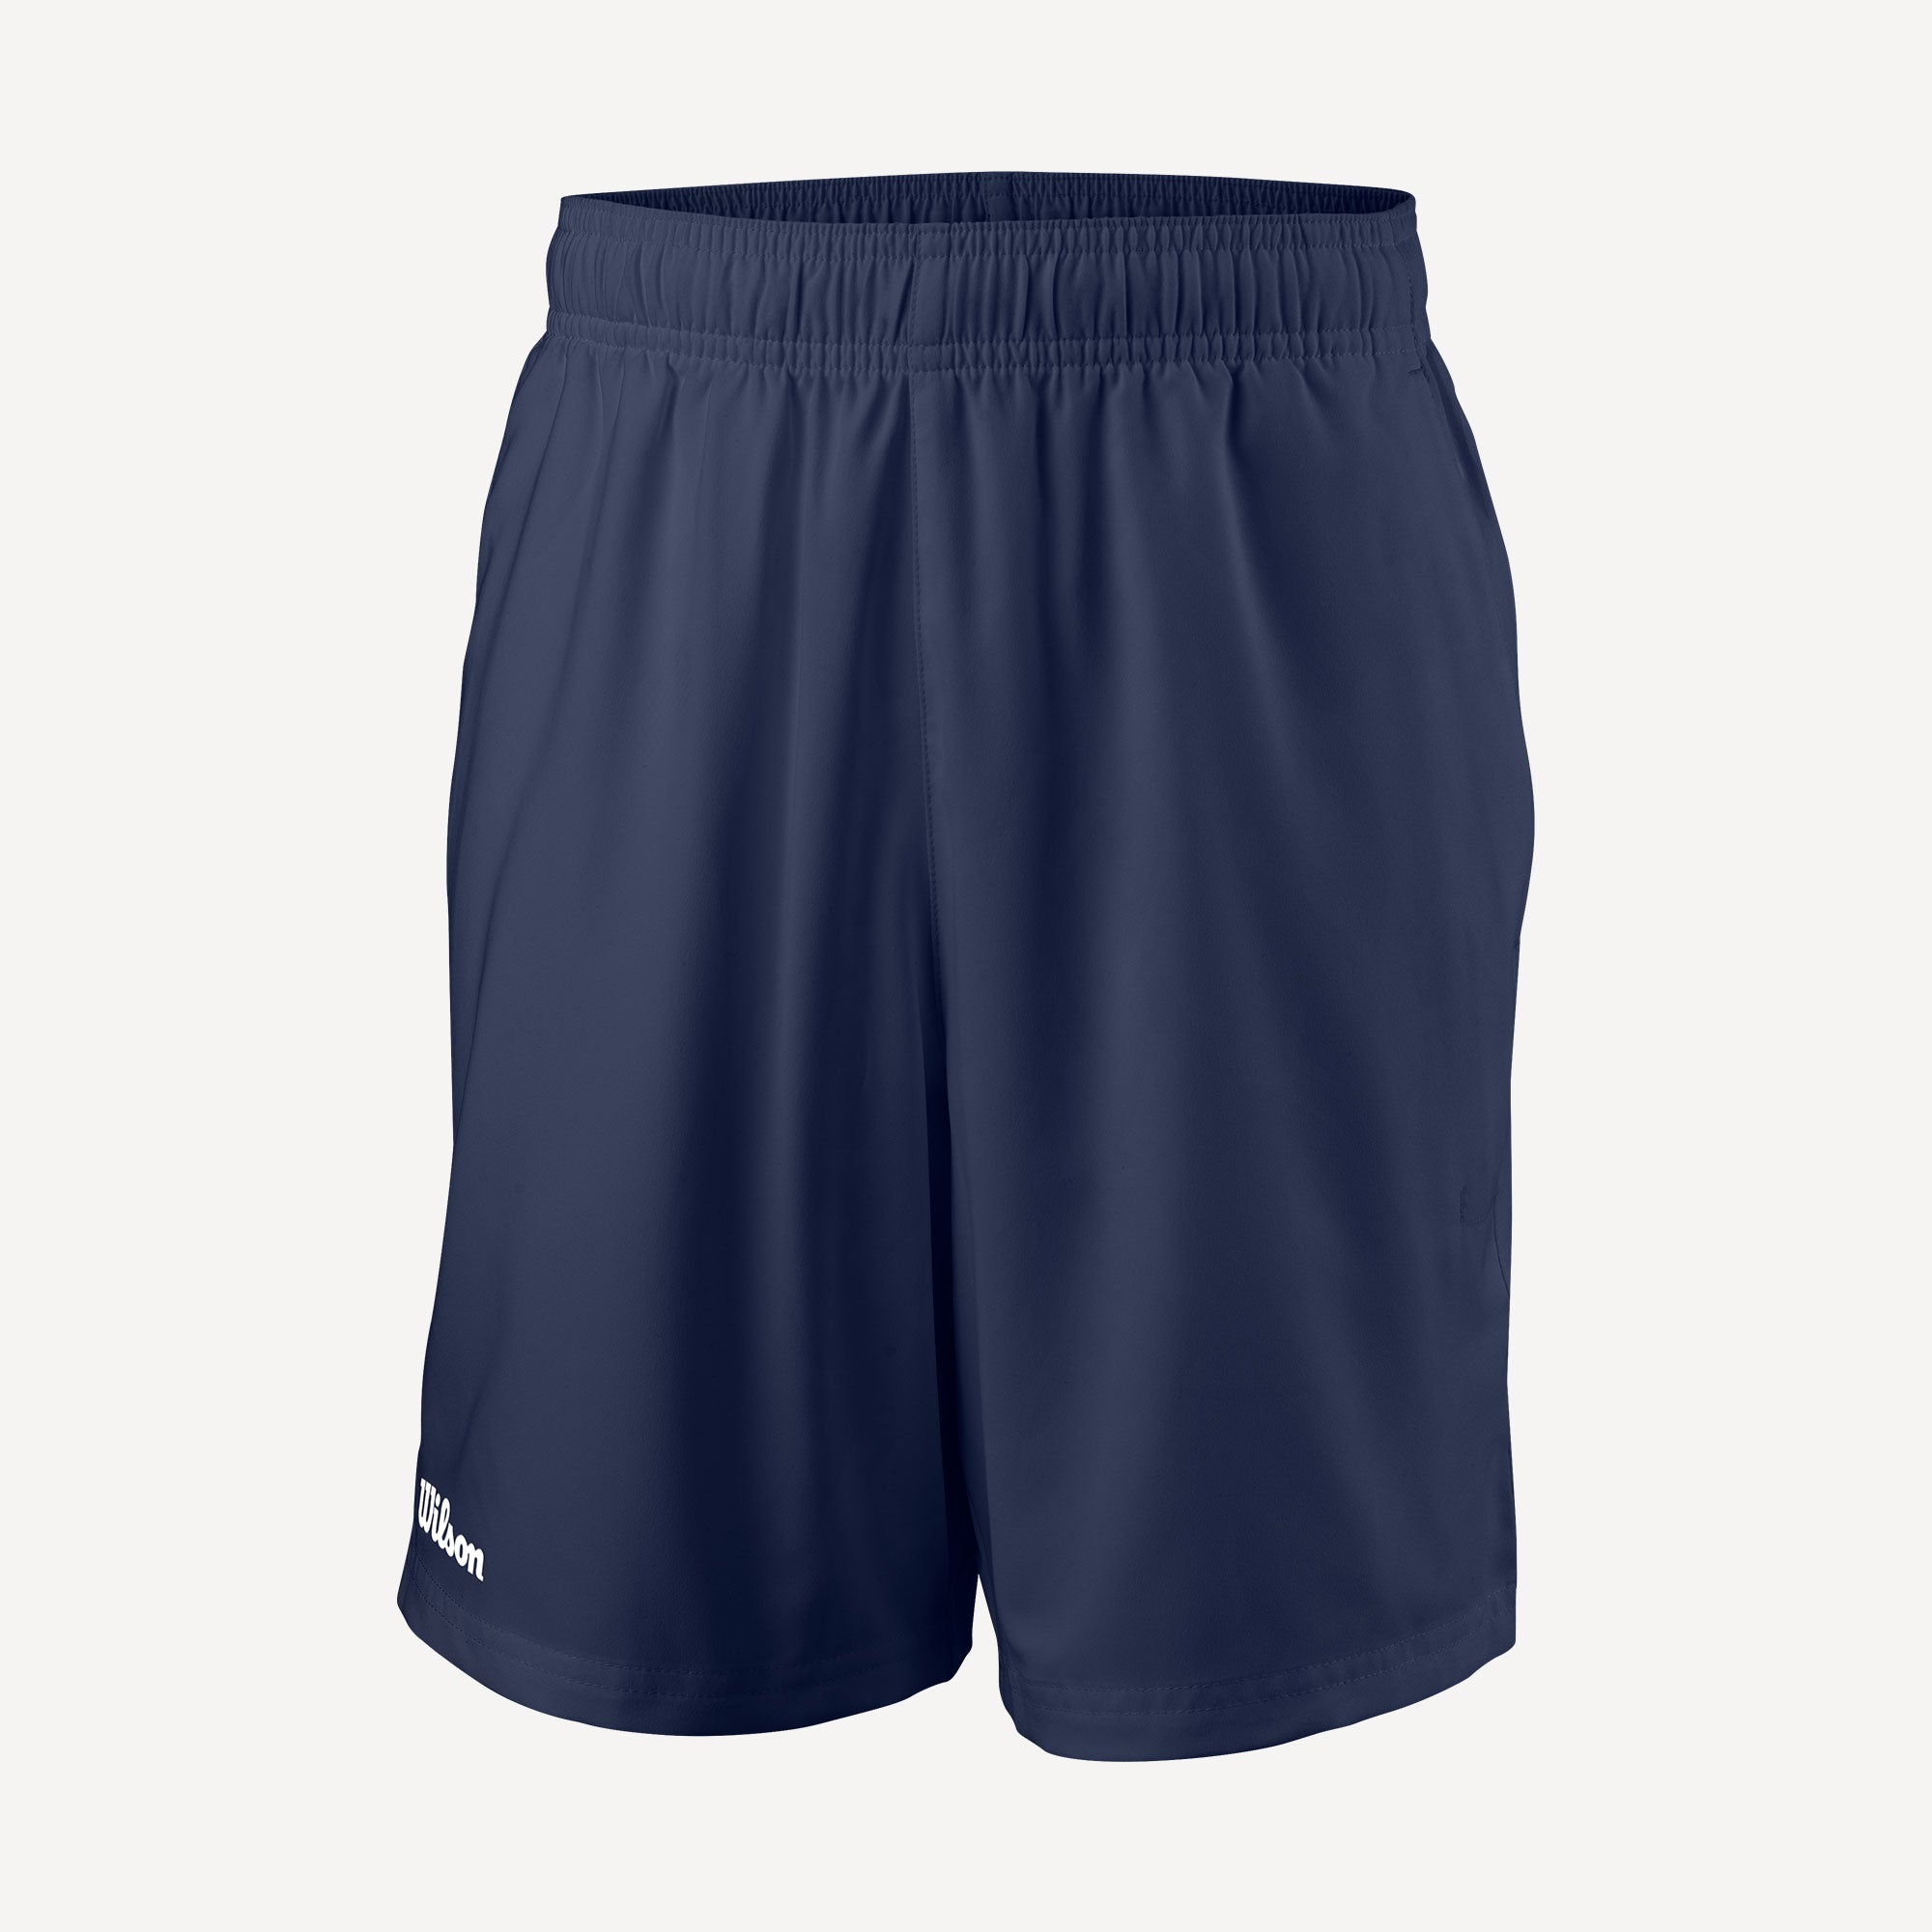 Wilson Team 2 Boys' 7-Inch Tennis Shorts Blue (1)